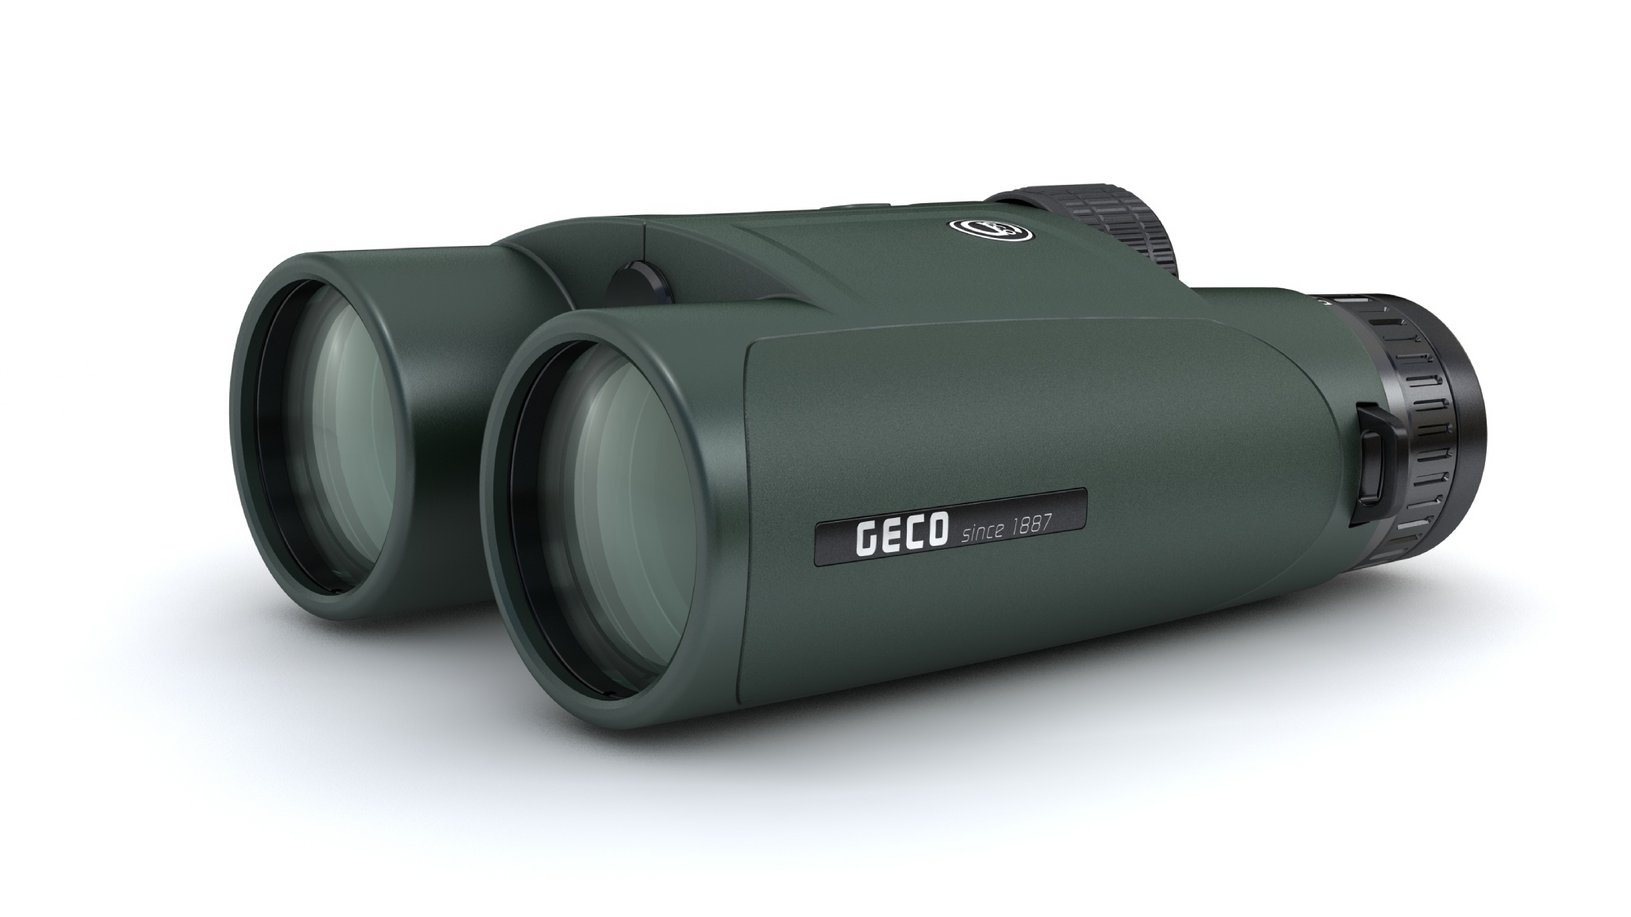 Image of the GECO Binocular Rangefinder 10x50 Green in lying position